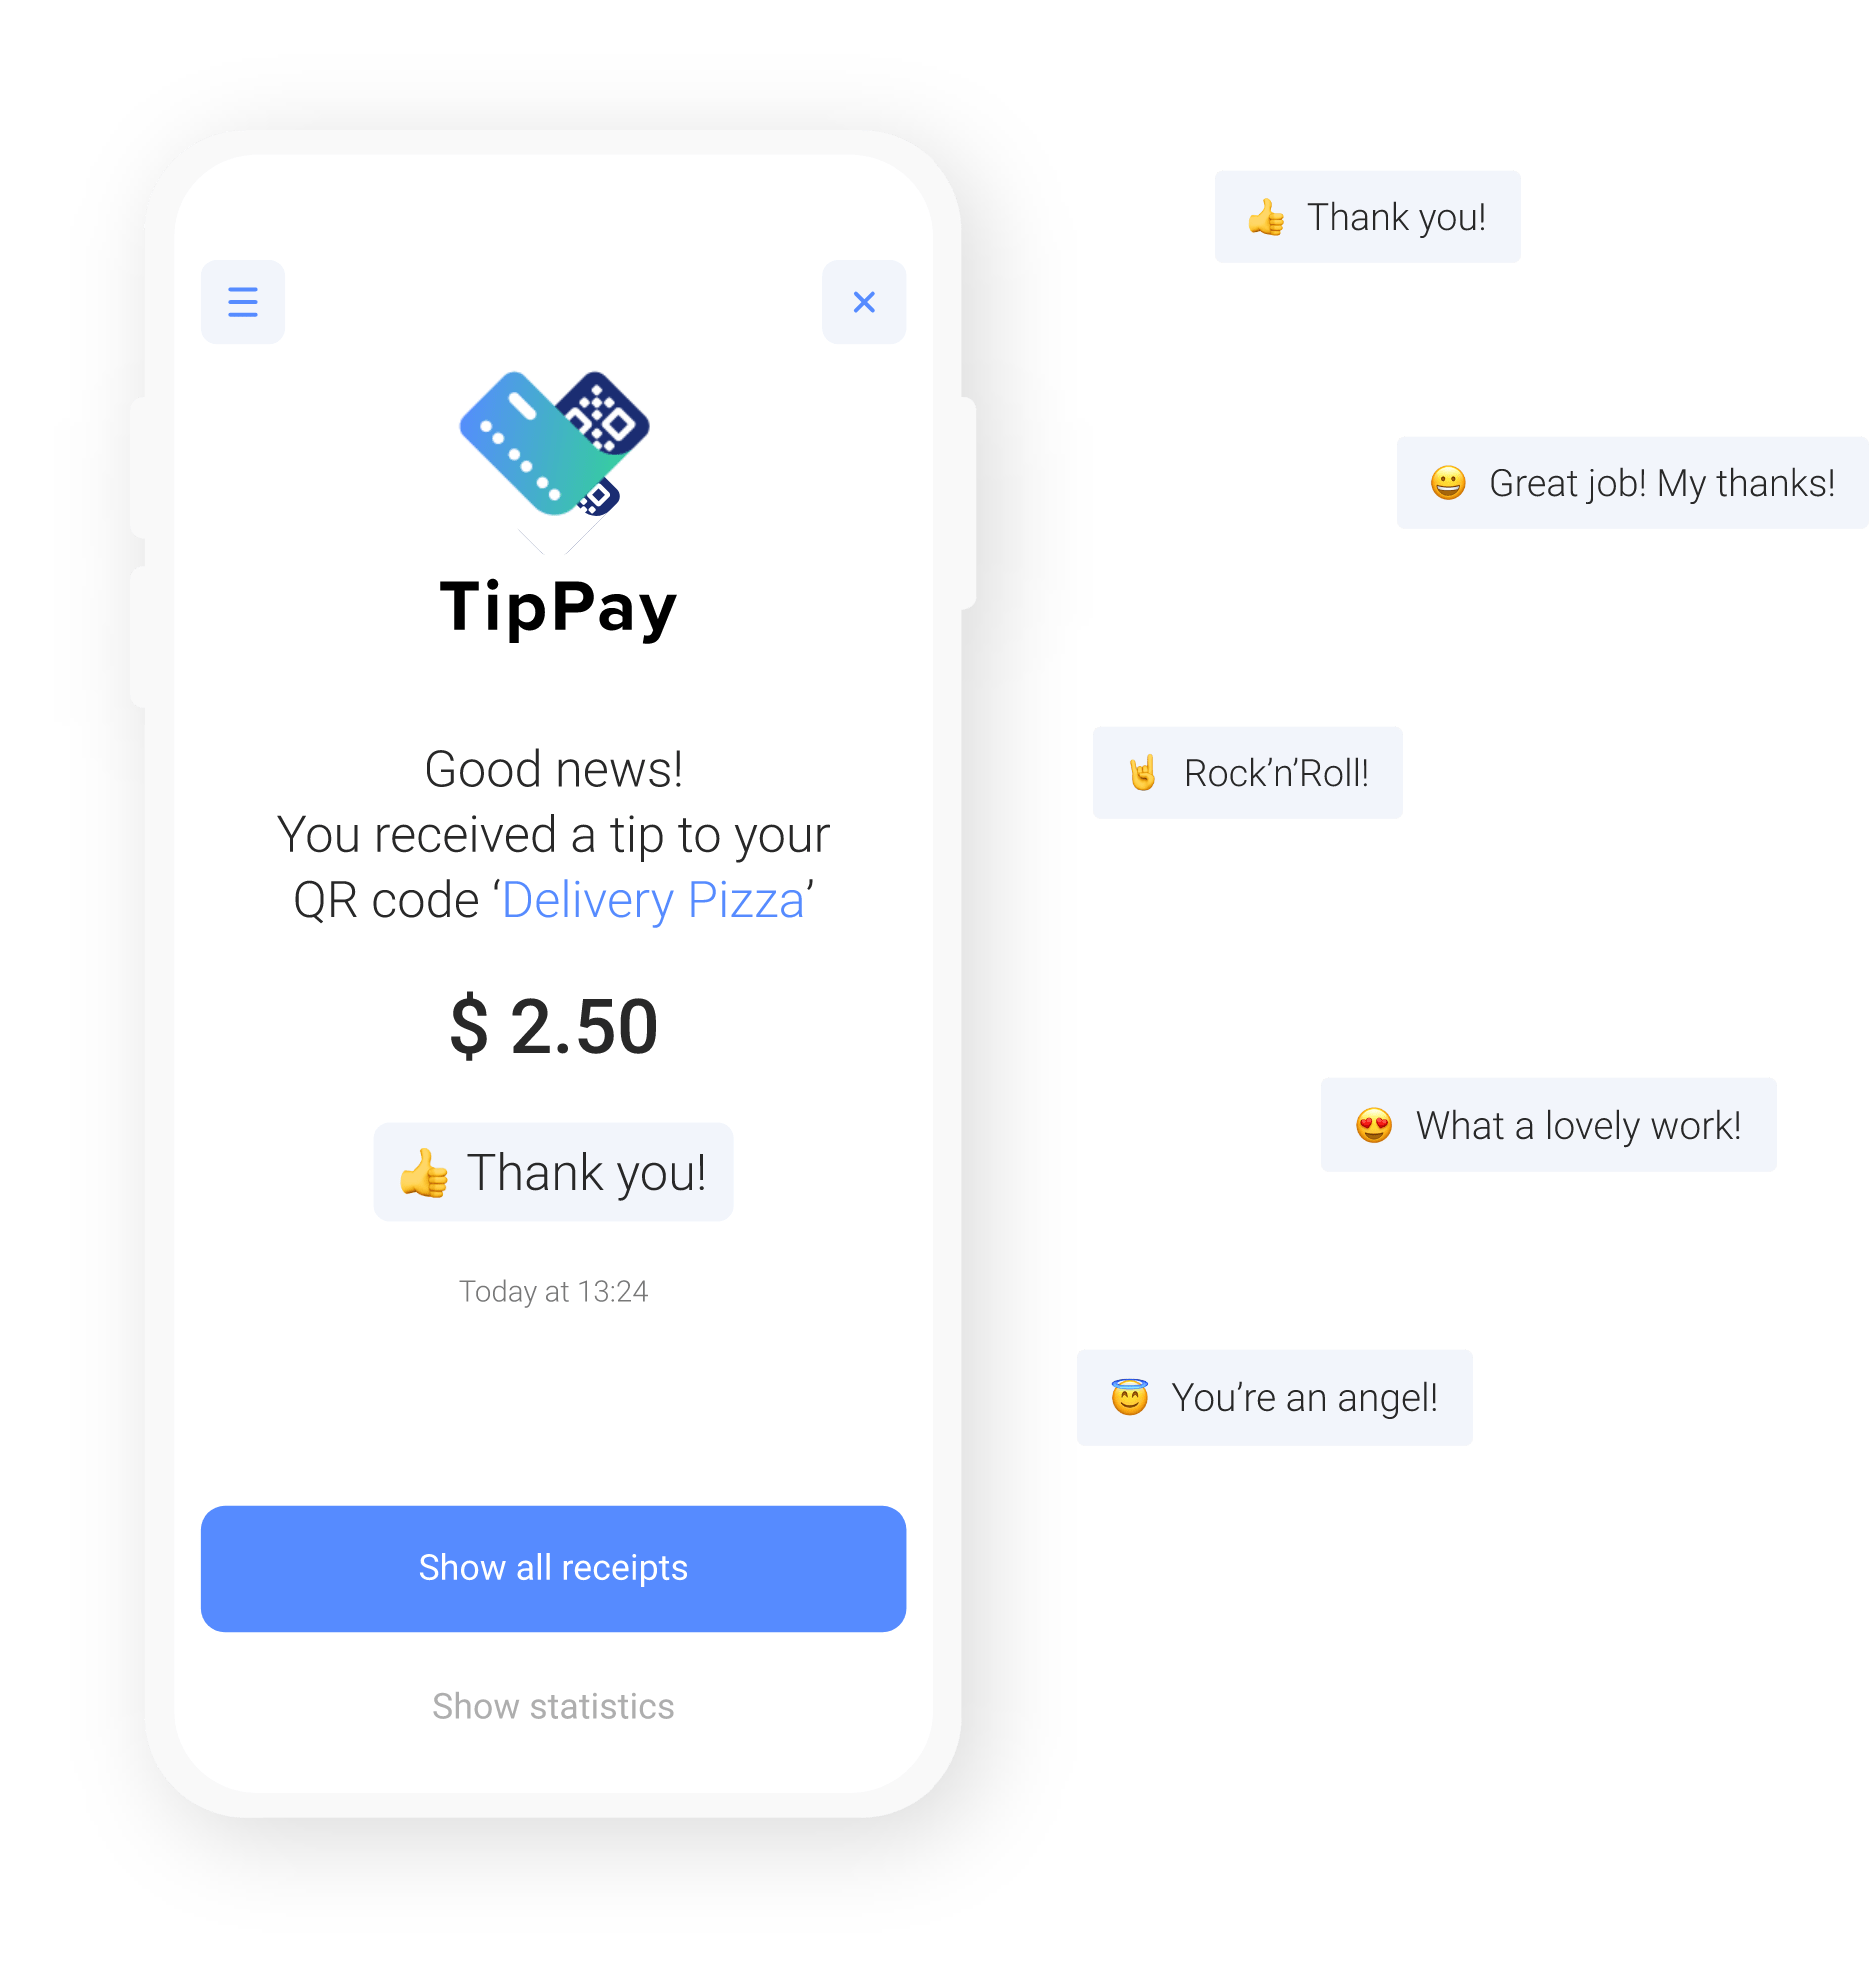 tippay-01-phone2